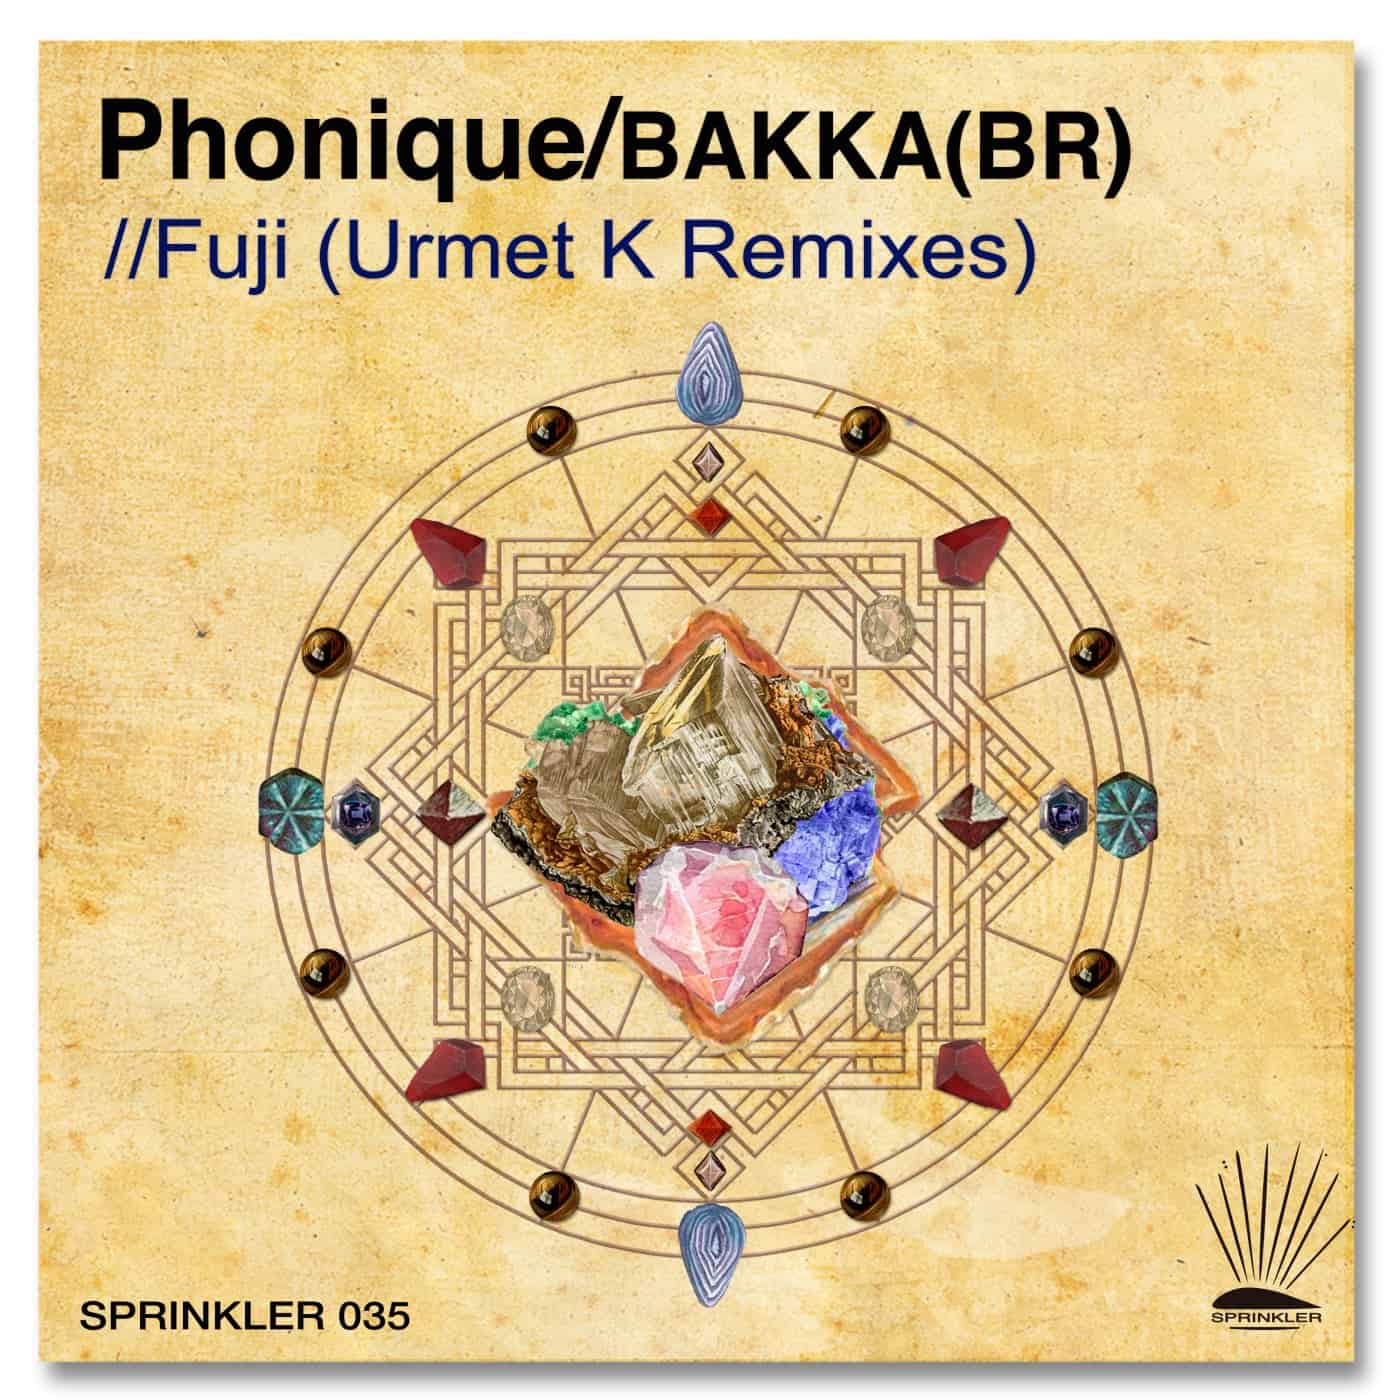 Download Phonique, Bakka (BR) - Fuji (Urmet K Remixes) on Electrobuzz